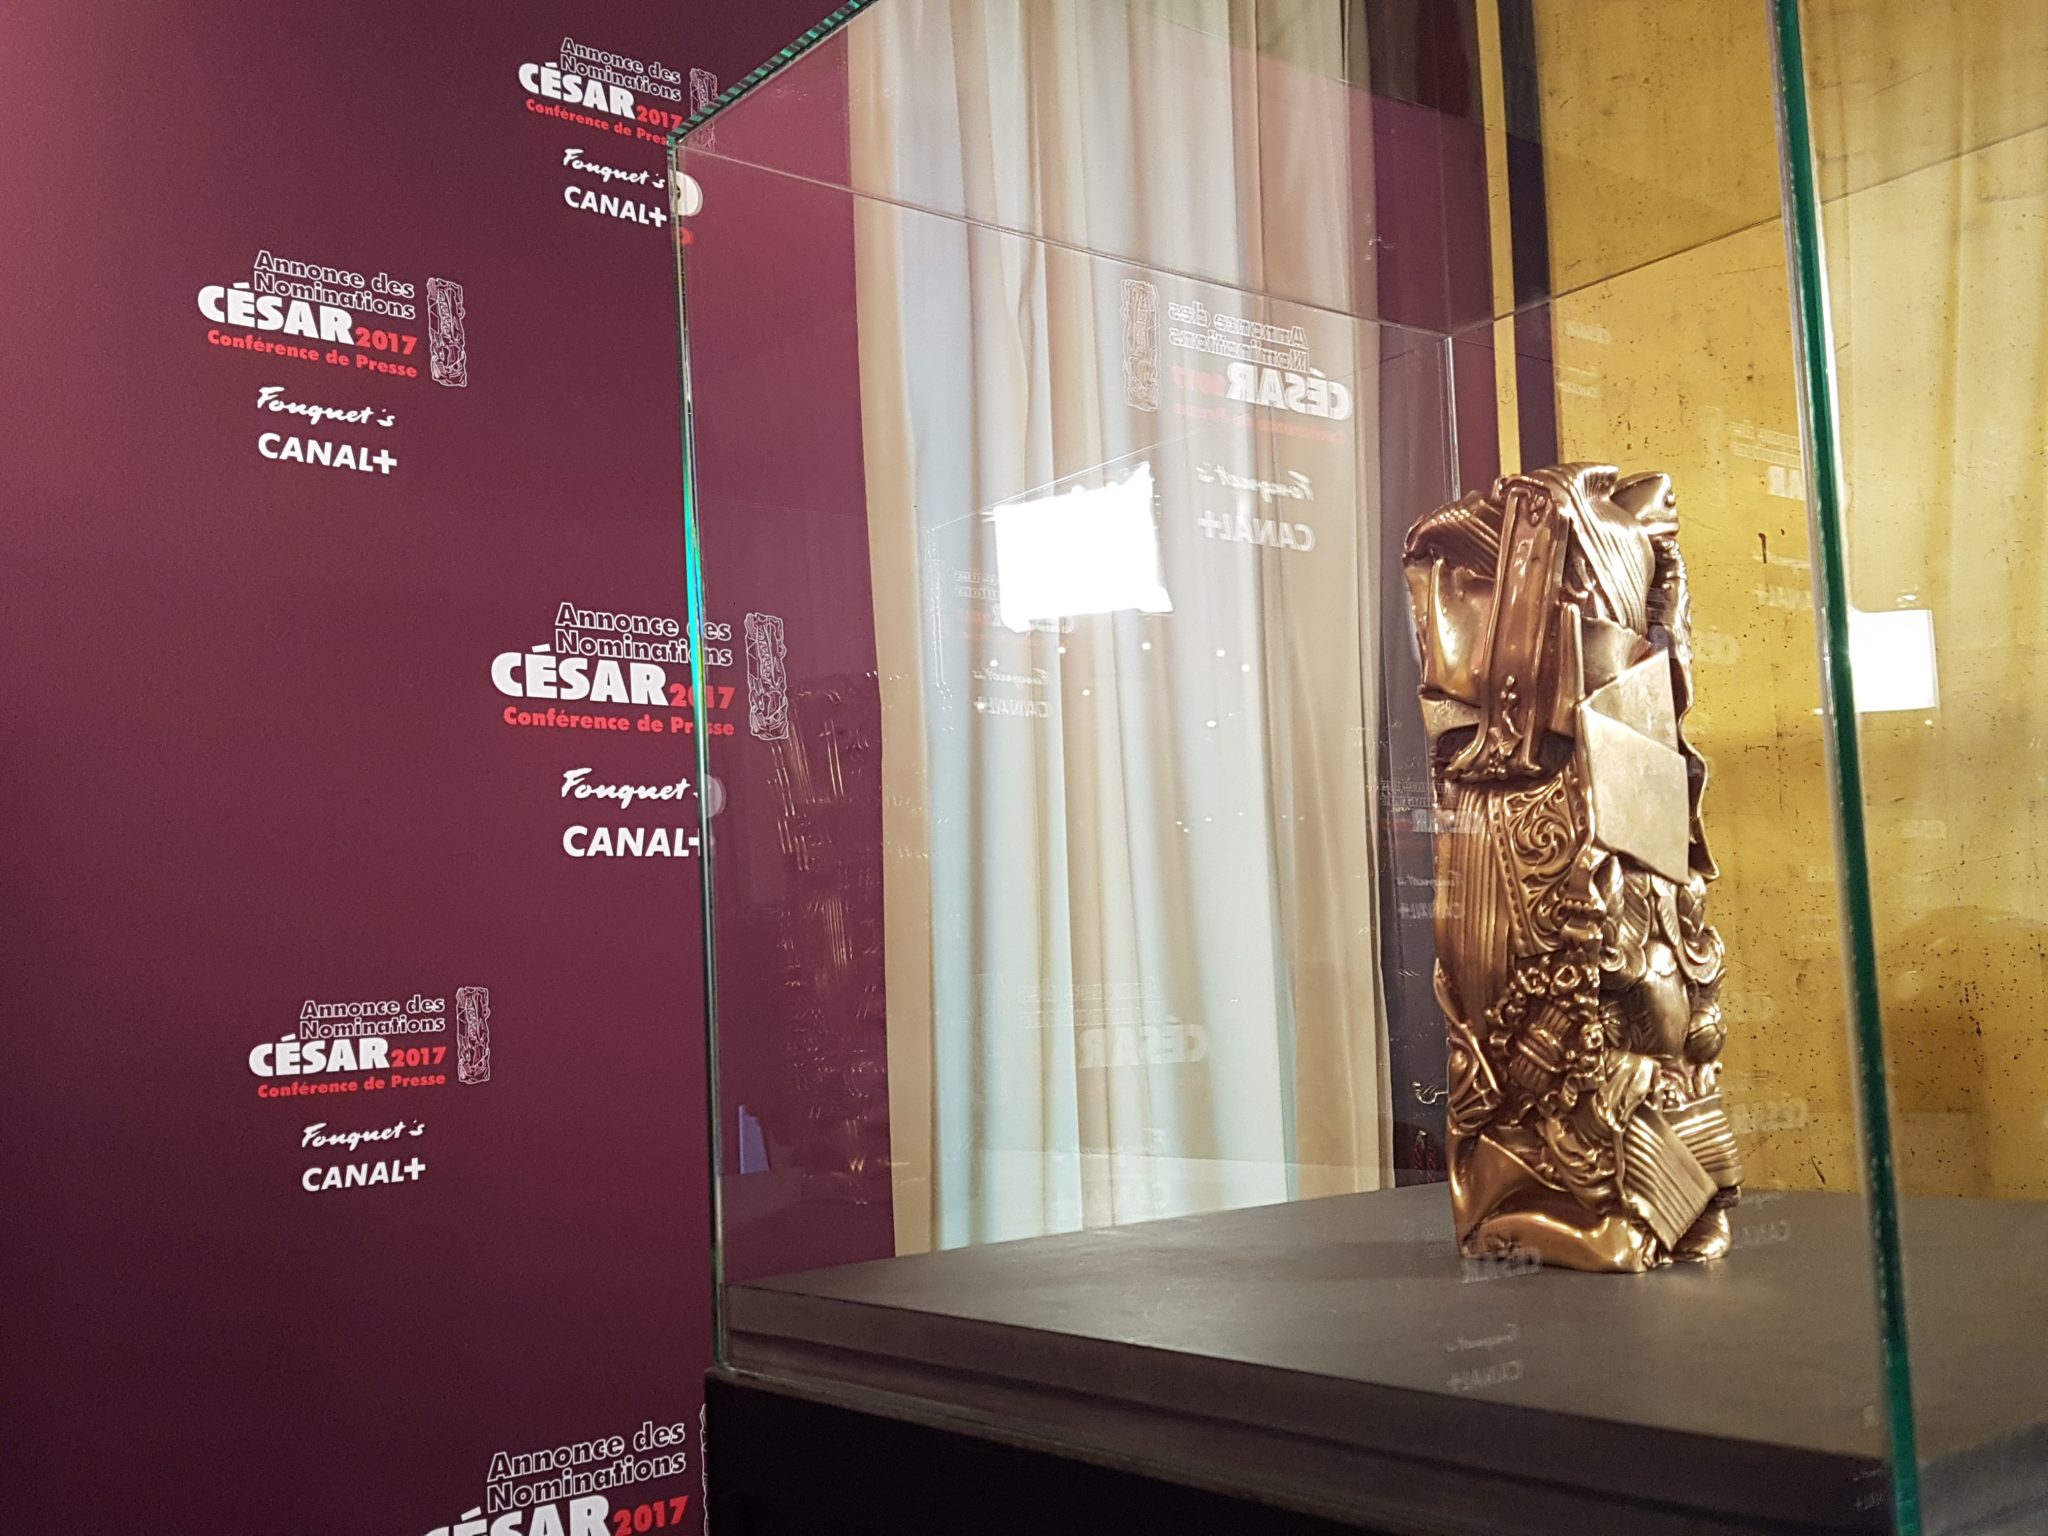 Cesar 2017 conference de presse nominations image 01